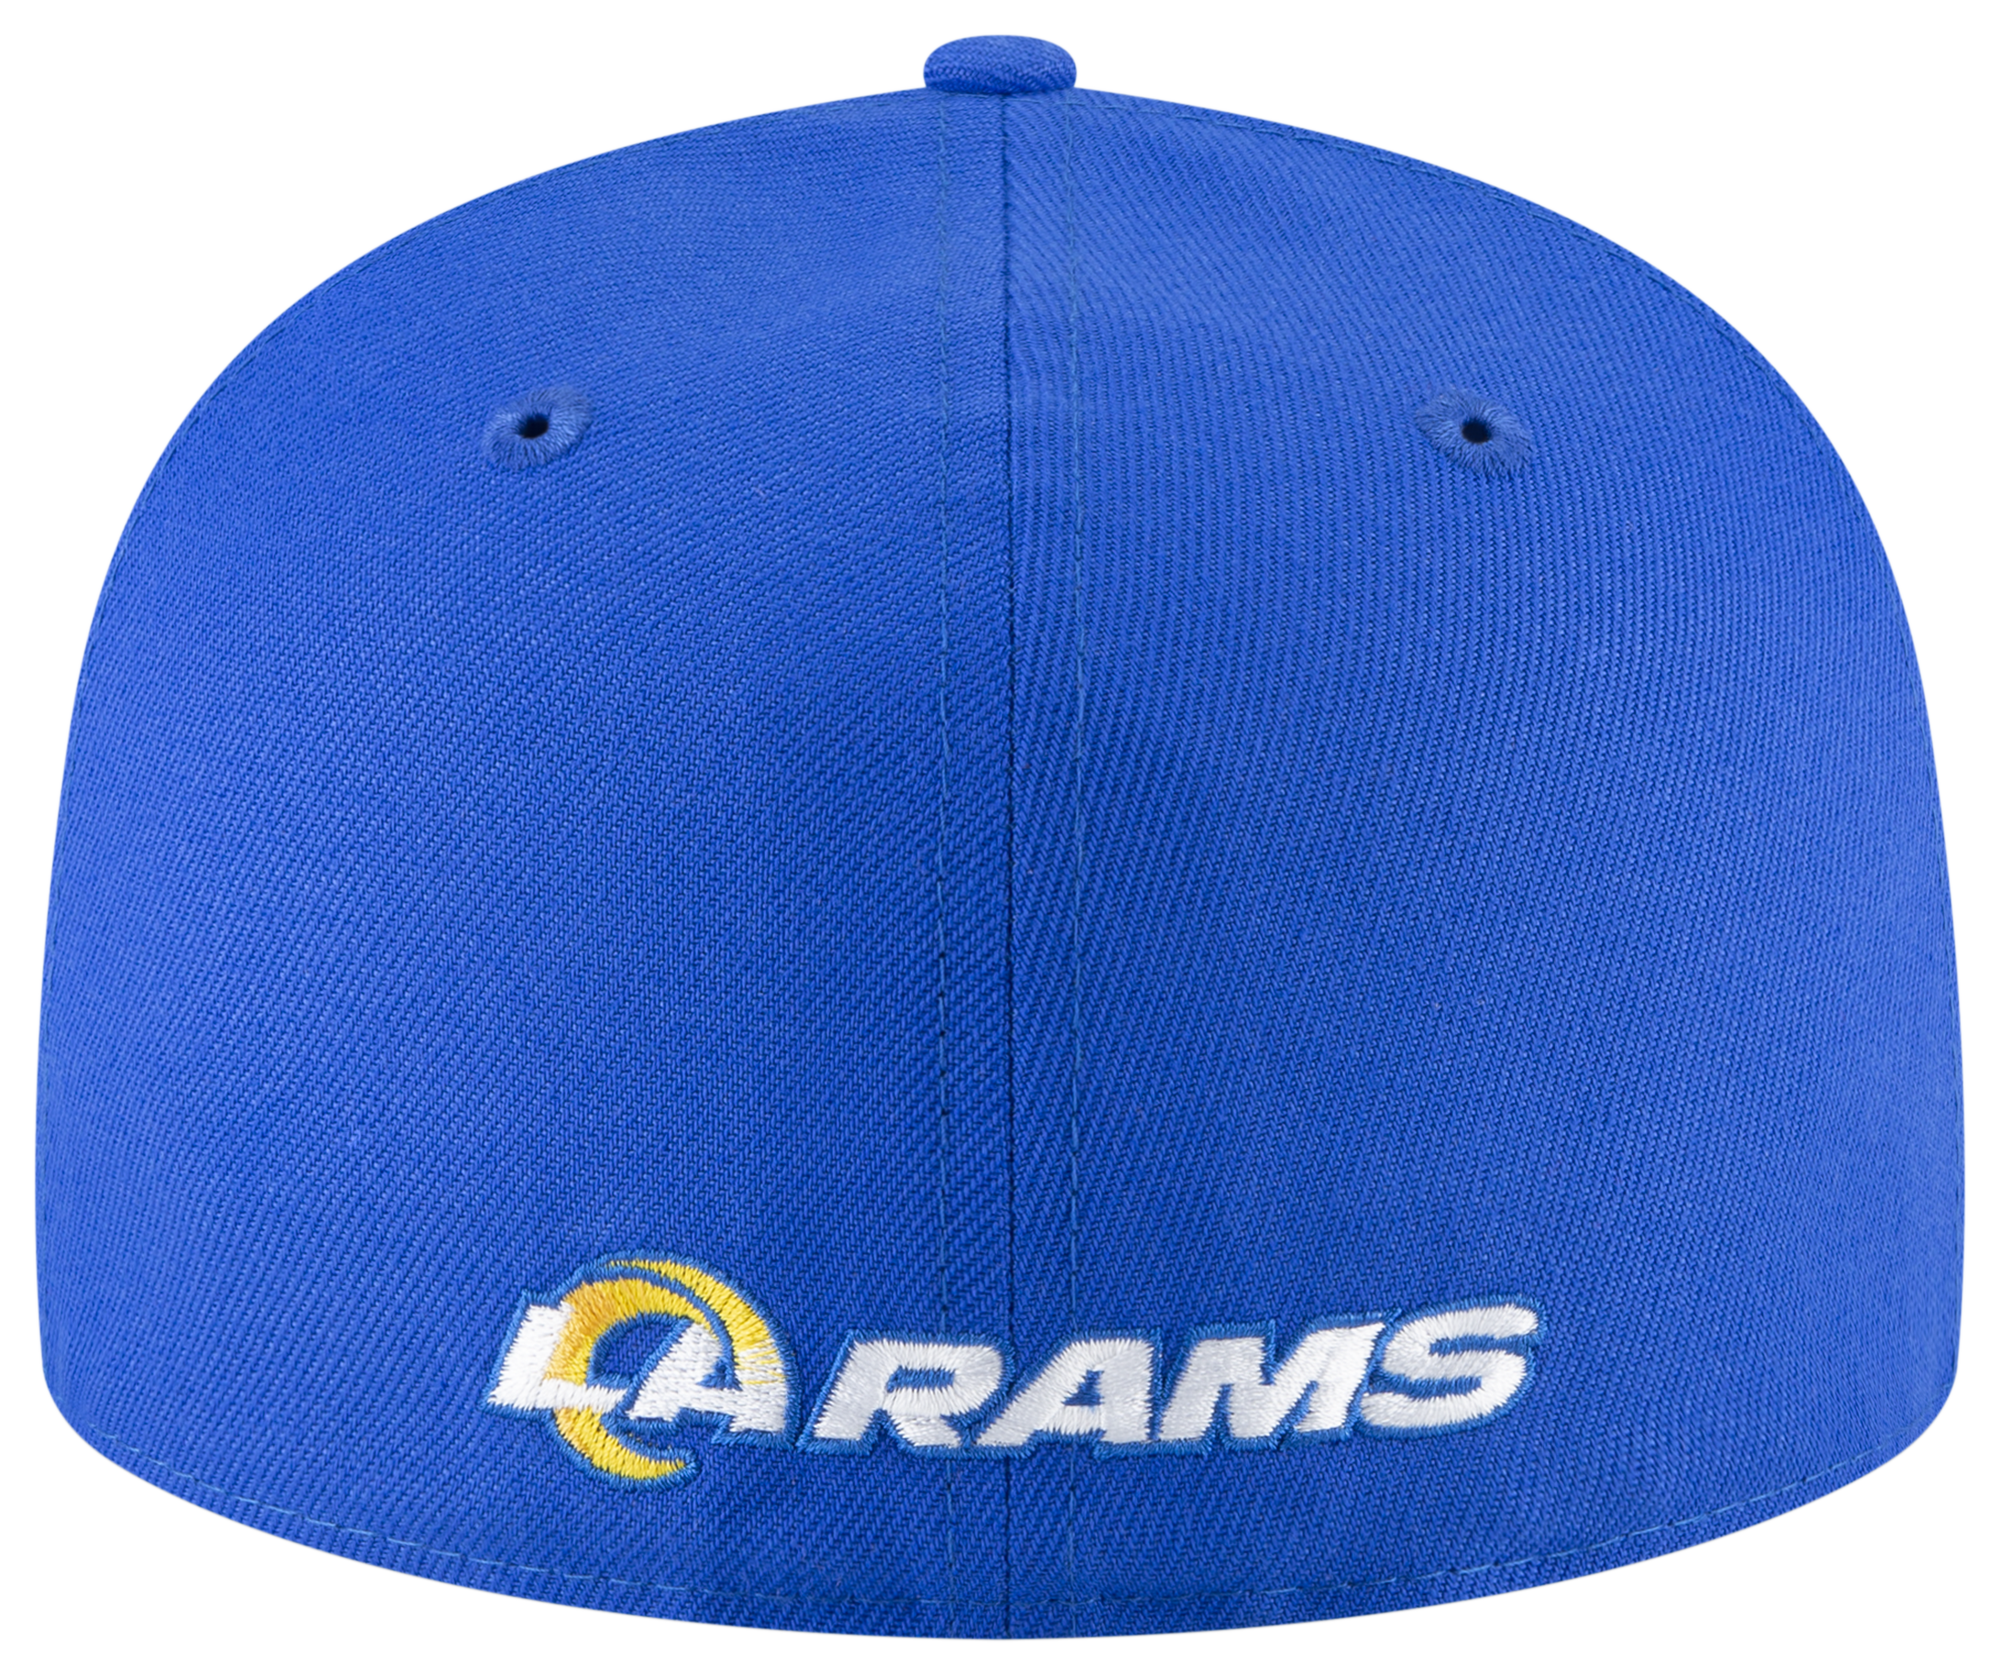 New Era Rams 5950 T/C Fitted Cap